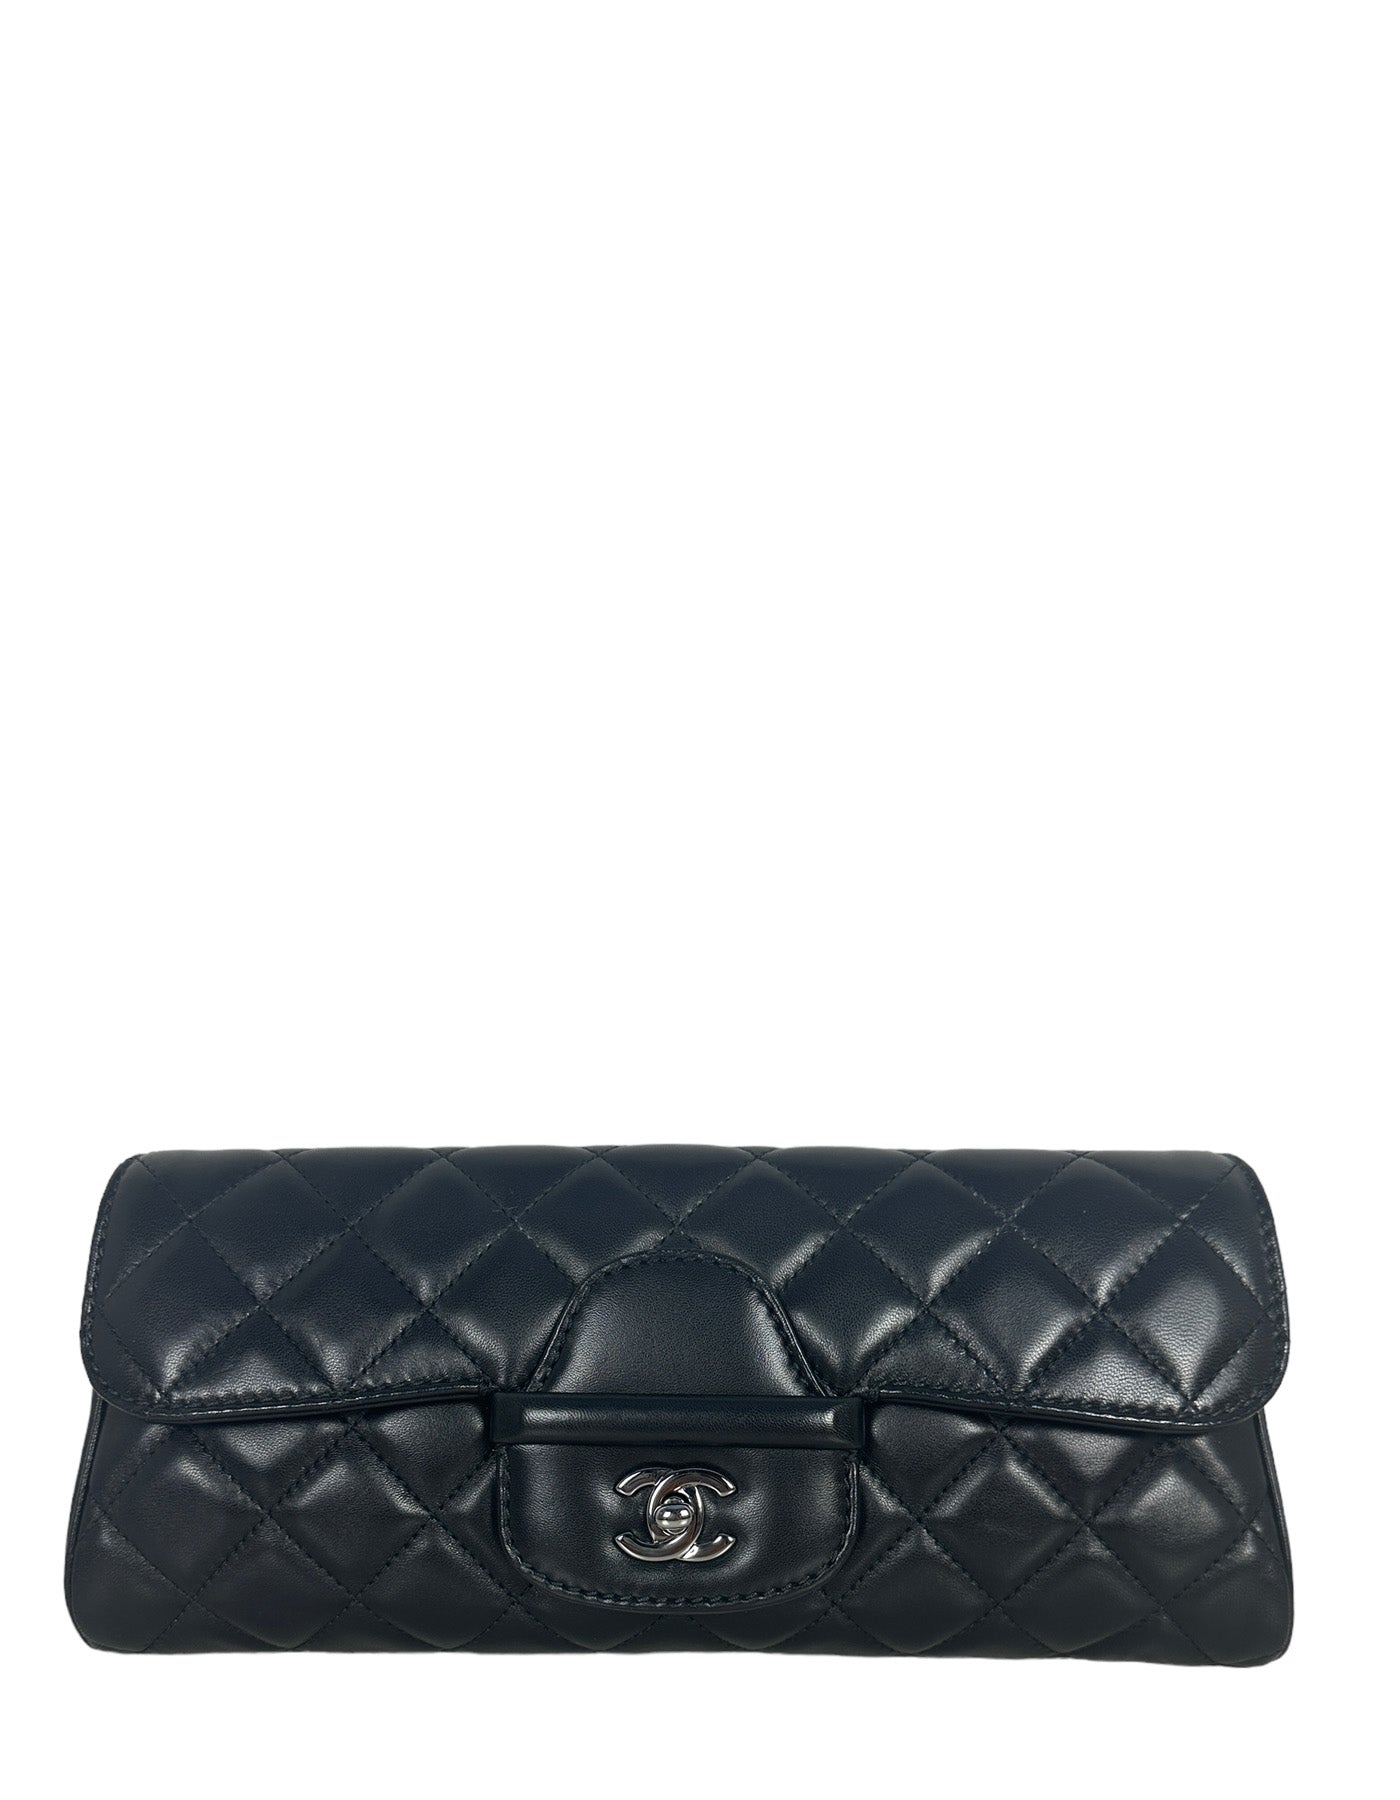 Chanel Black Lambskin CC Twistlock Clutch Bag